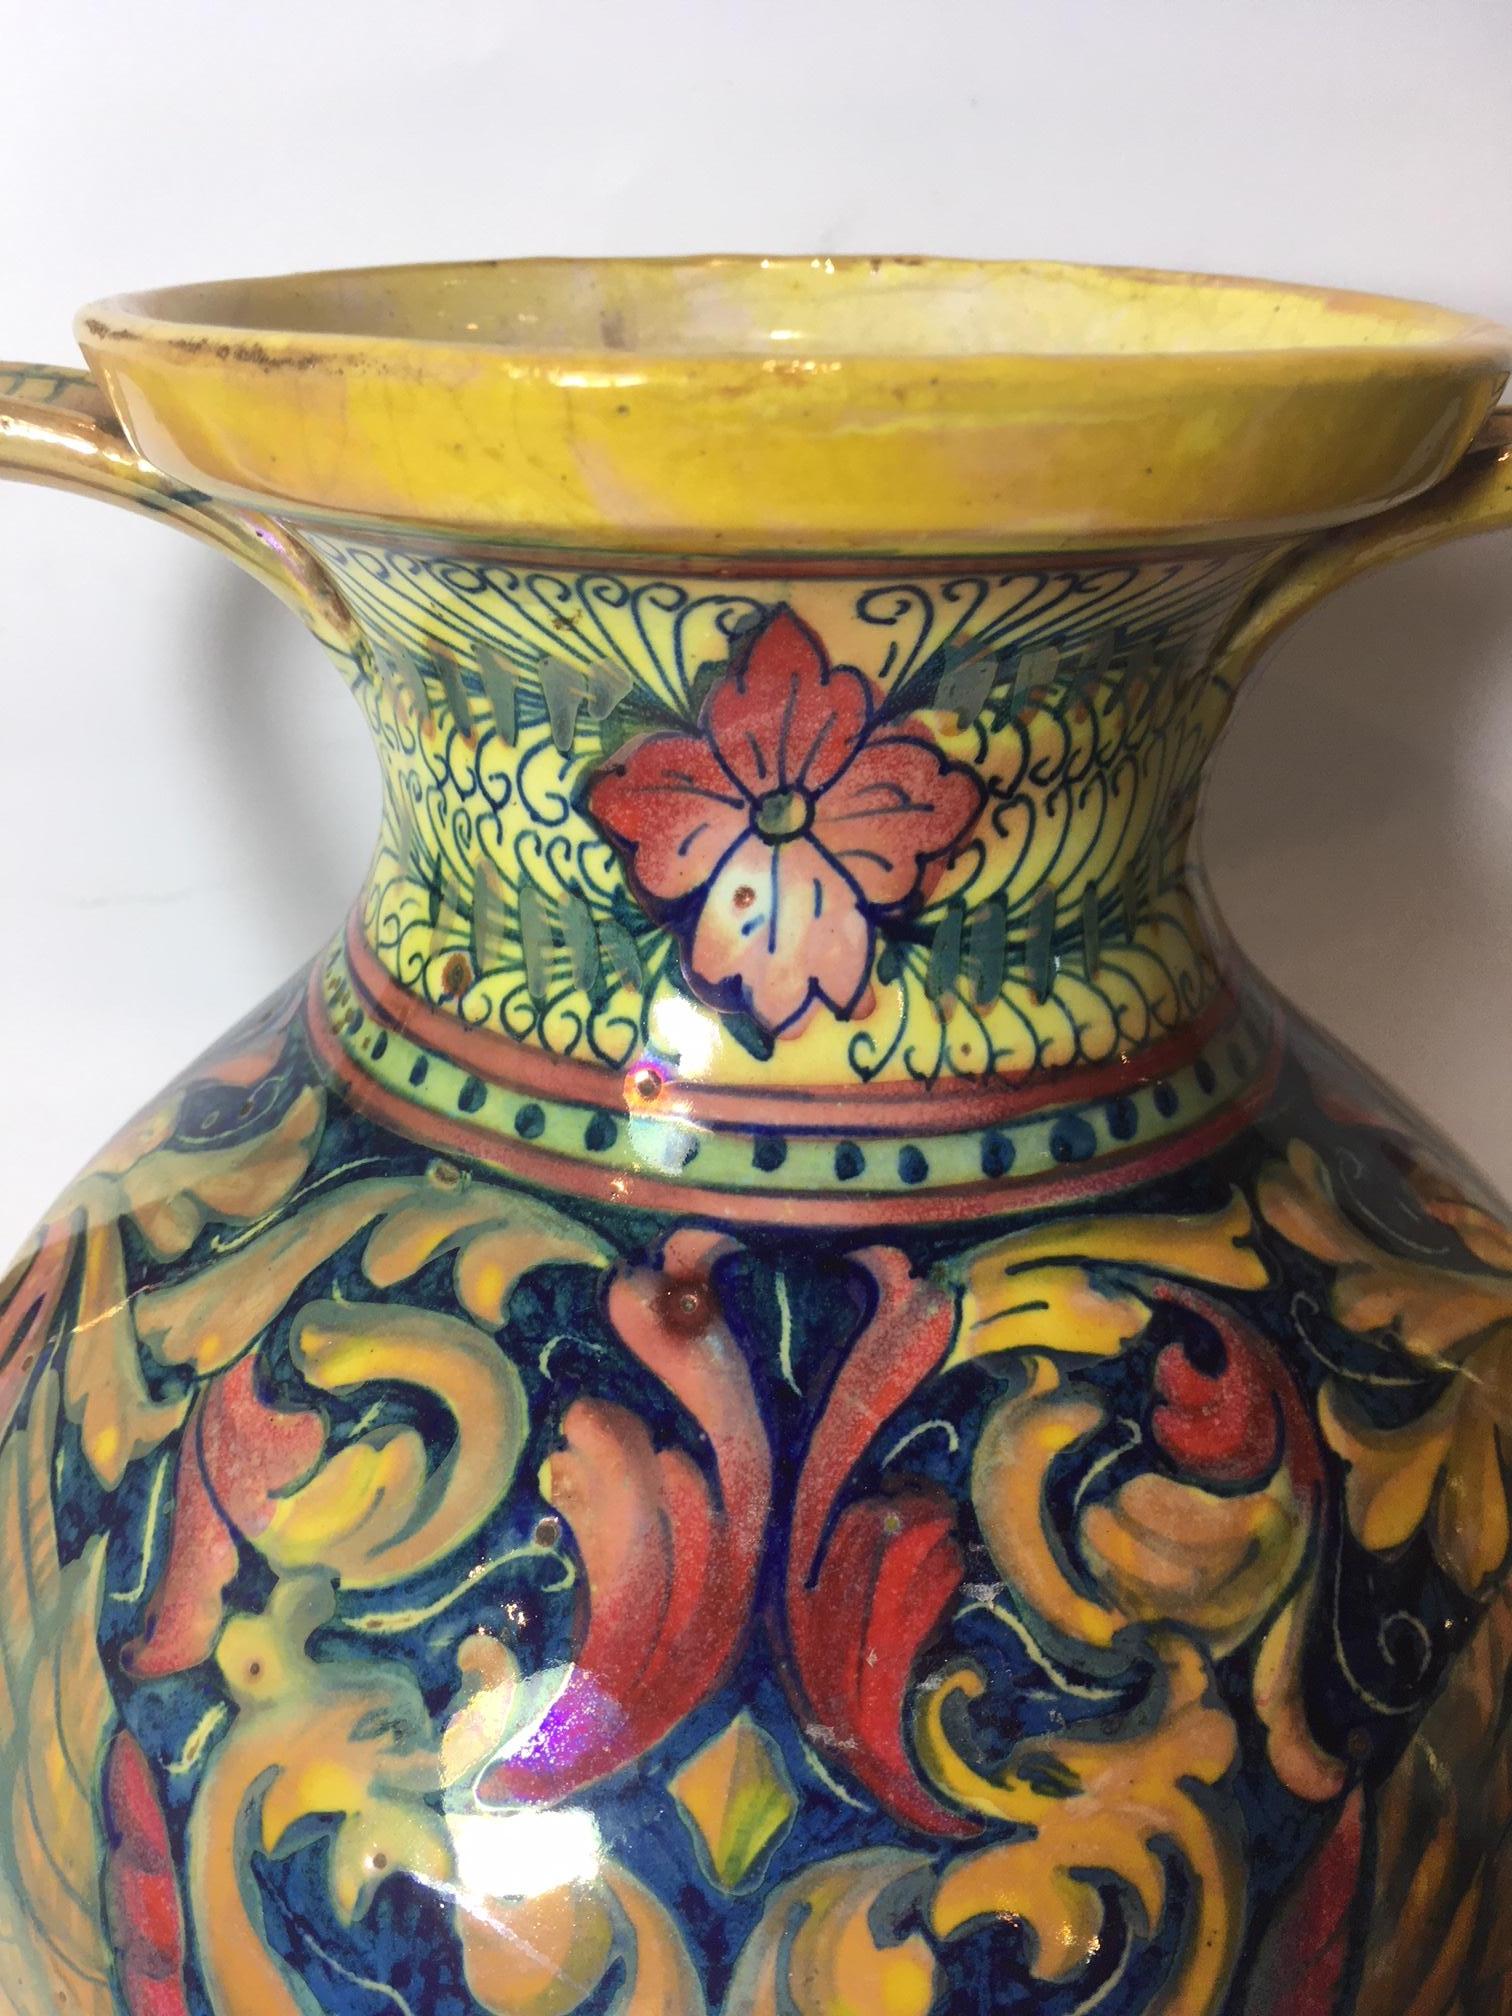 20th Century Renaissence Revival Polychrome Drawings Pottery Gualdo Tadino Vase For Sale 4